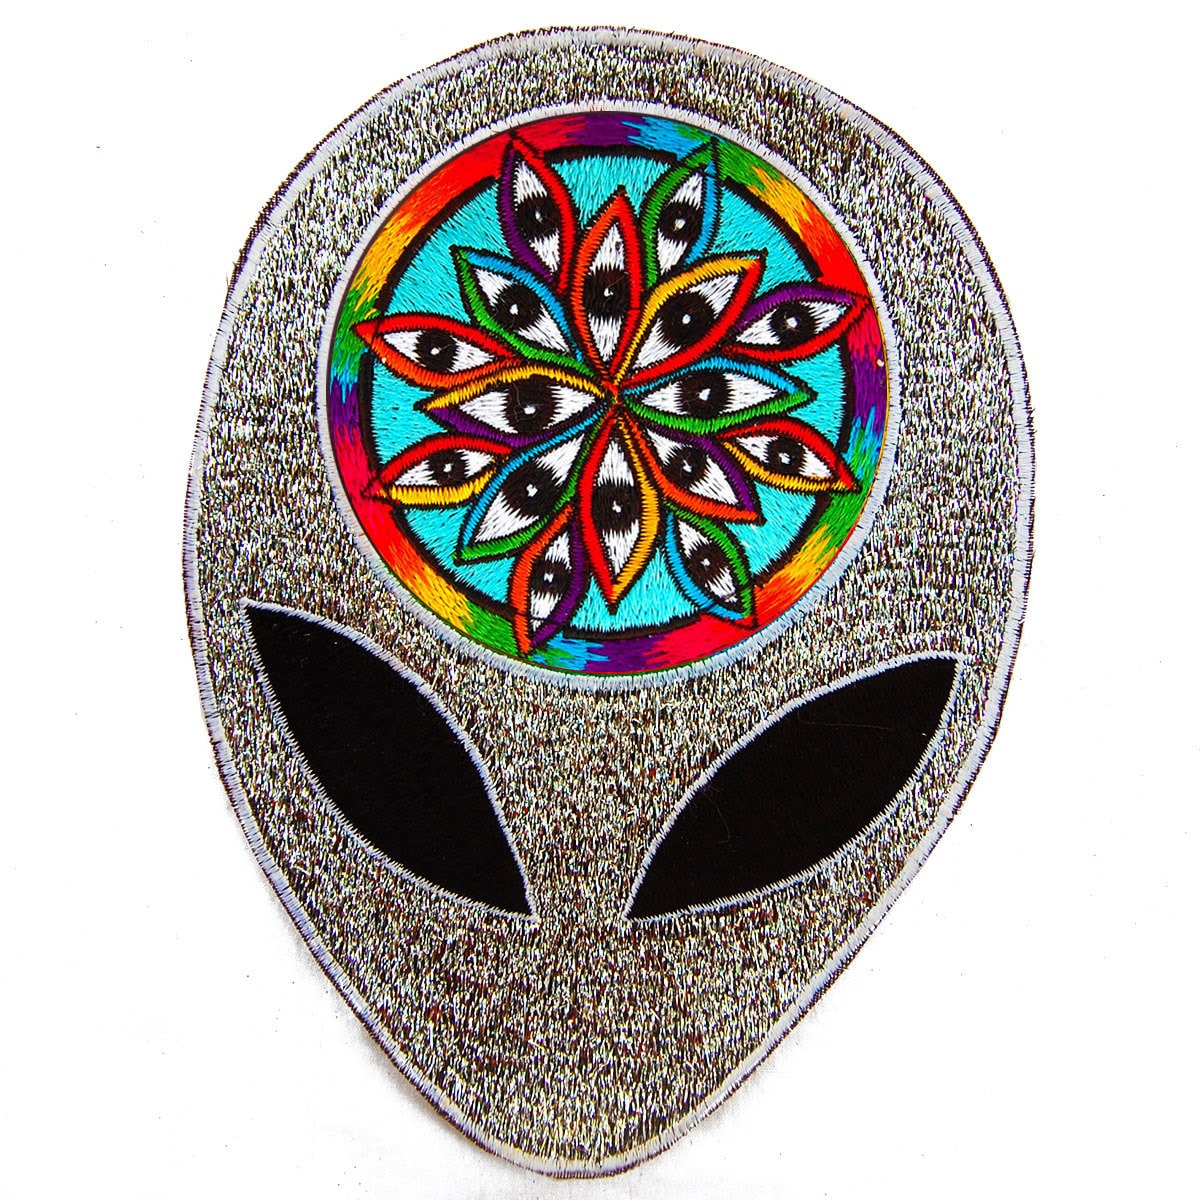 Alien Consciousness T-Shirt blacklight handmade embroidery no print goa t-shirt LSD eyes of visions